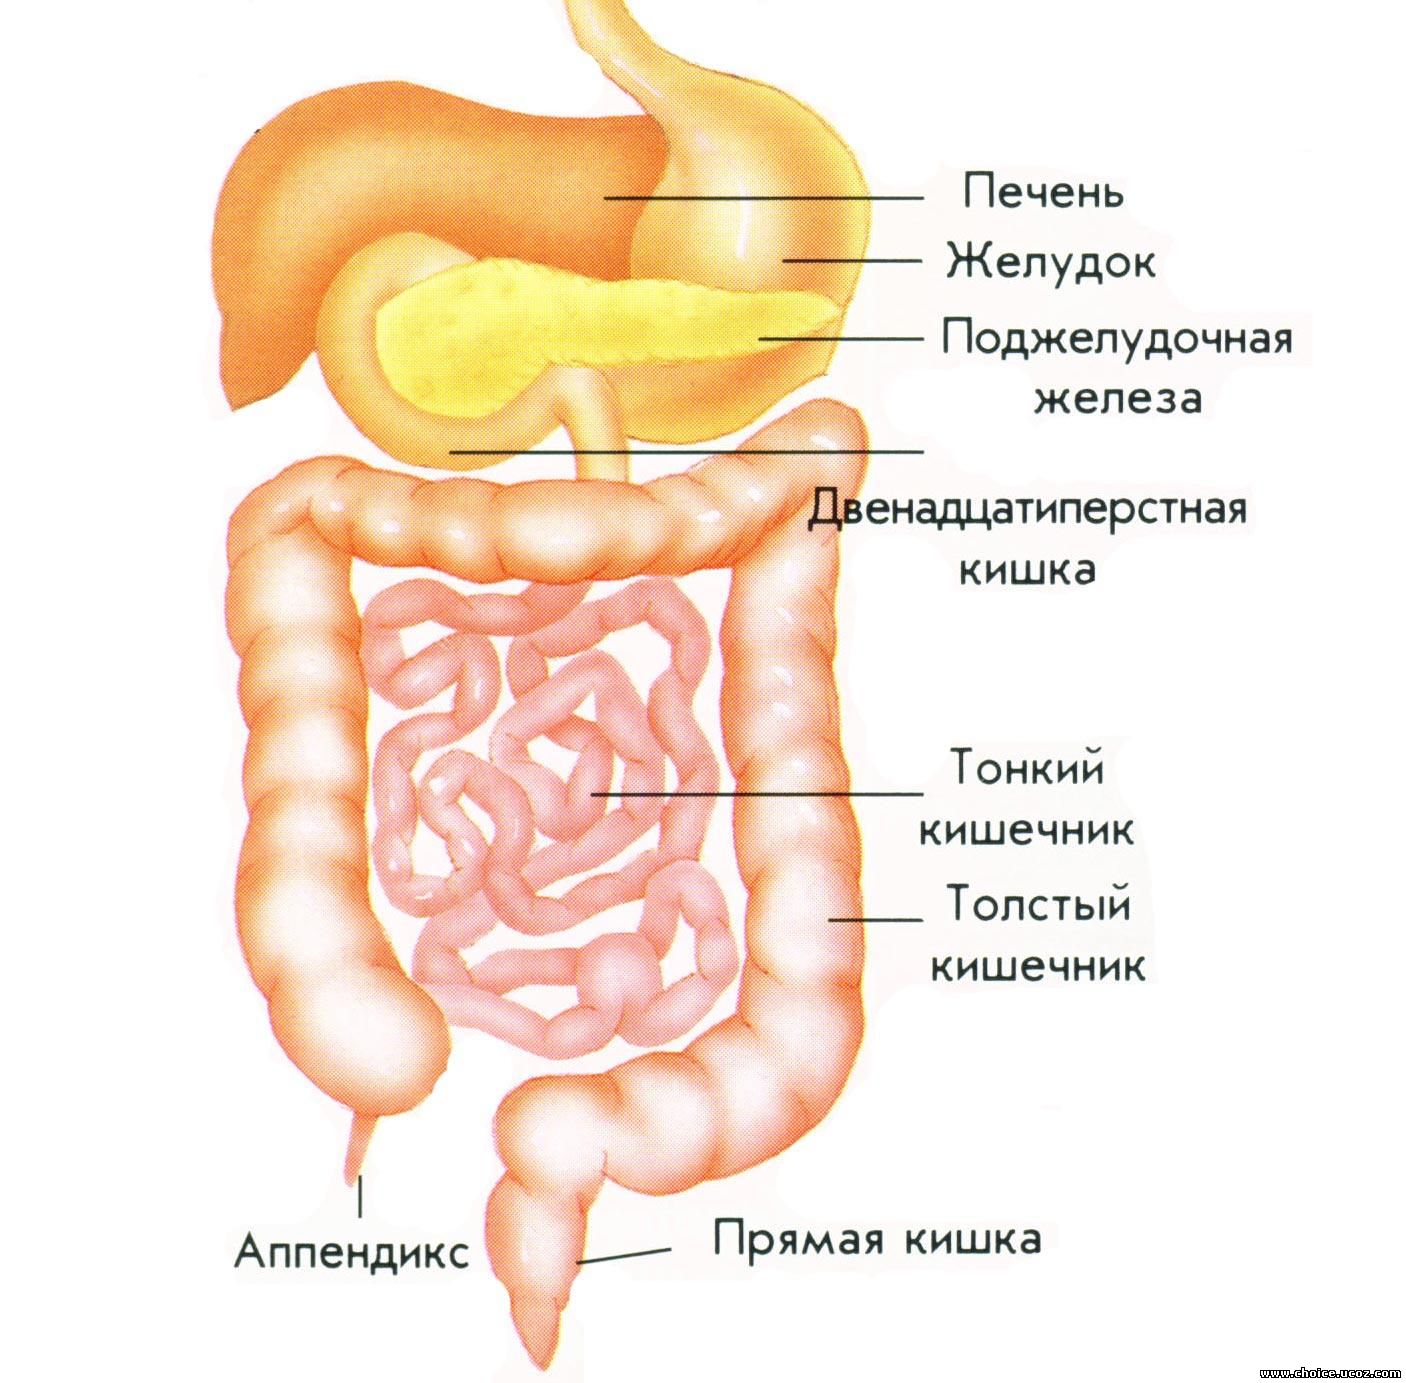 Кишечный отдел человека. Желудочно-кишечный тракт человека строение. Строение желудочно-кишечного тракта человека схема. Строение желудка и кишечника. Поджелудочная железа и тонкий кишечник.